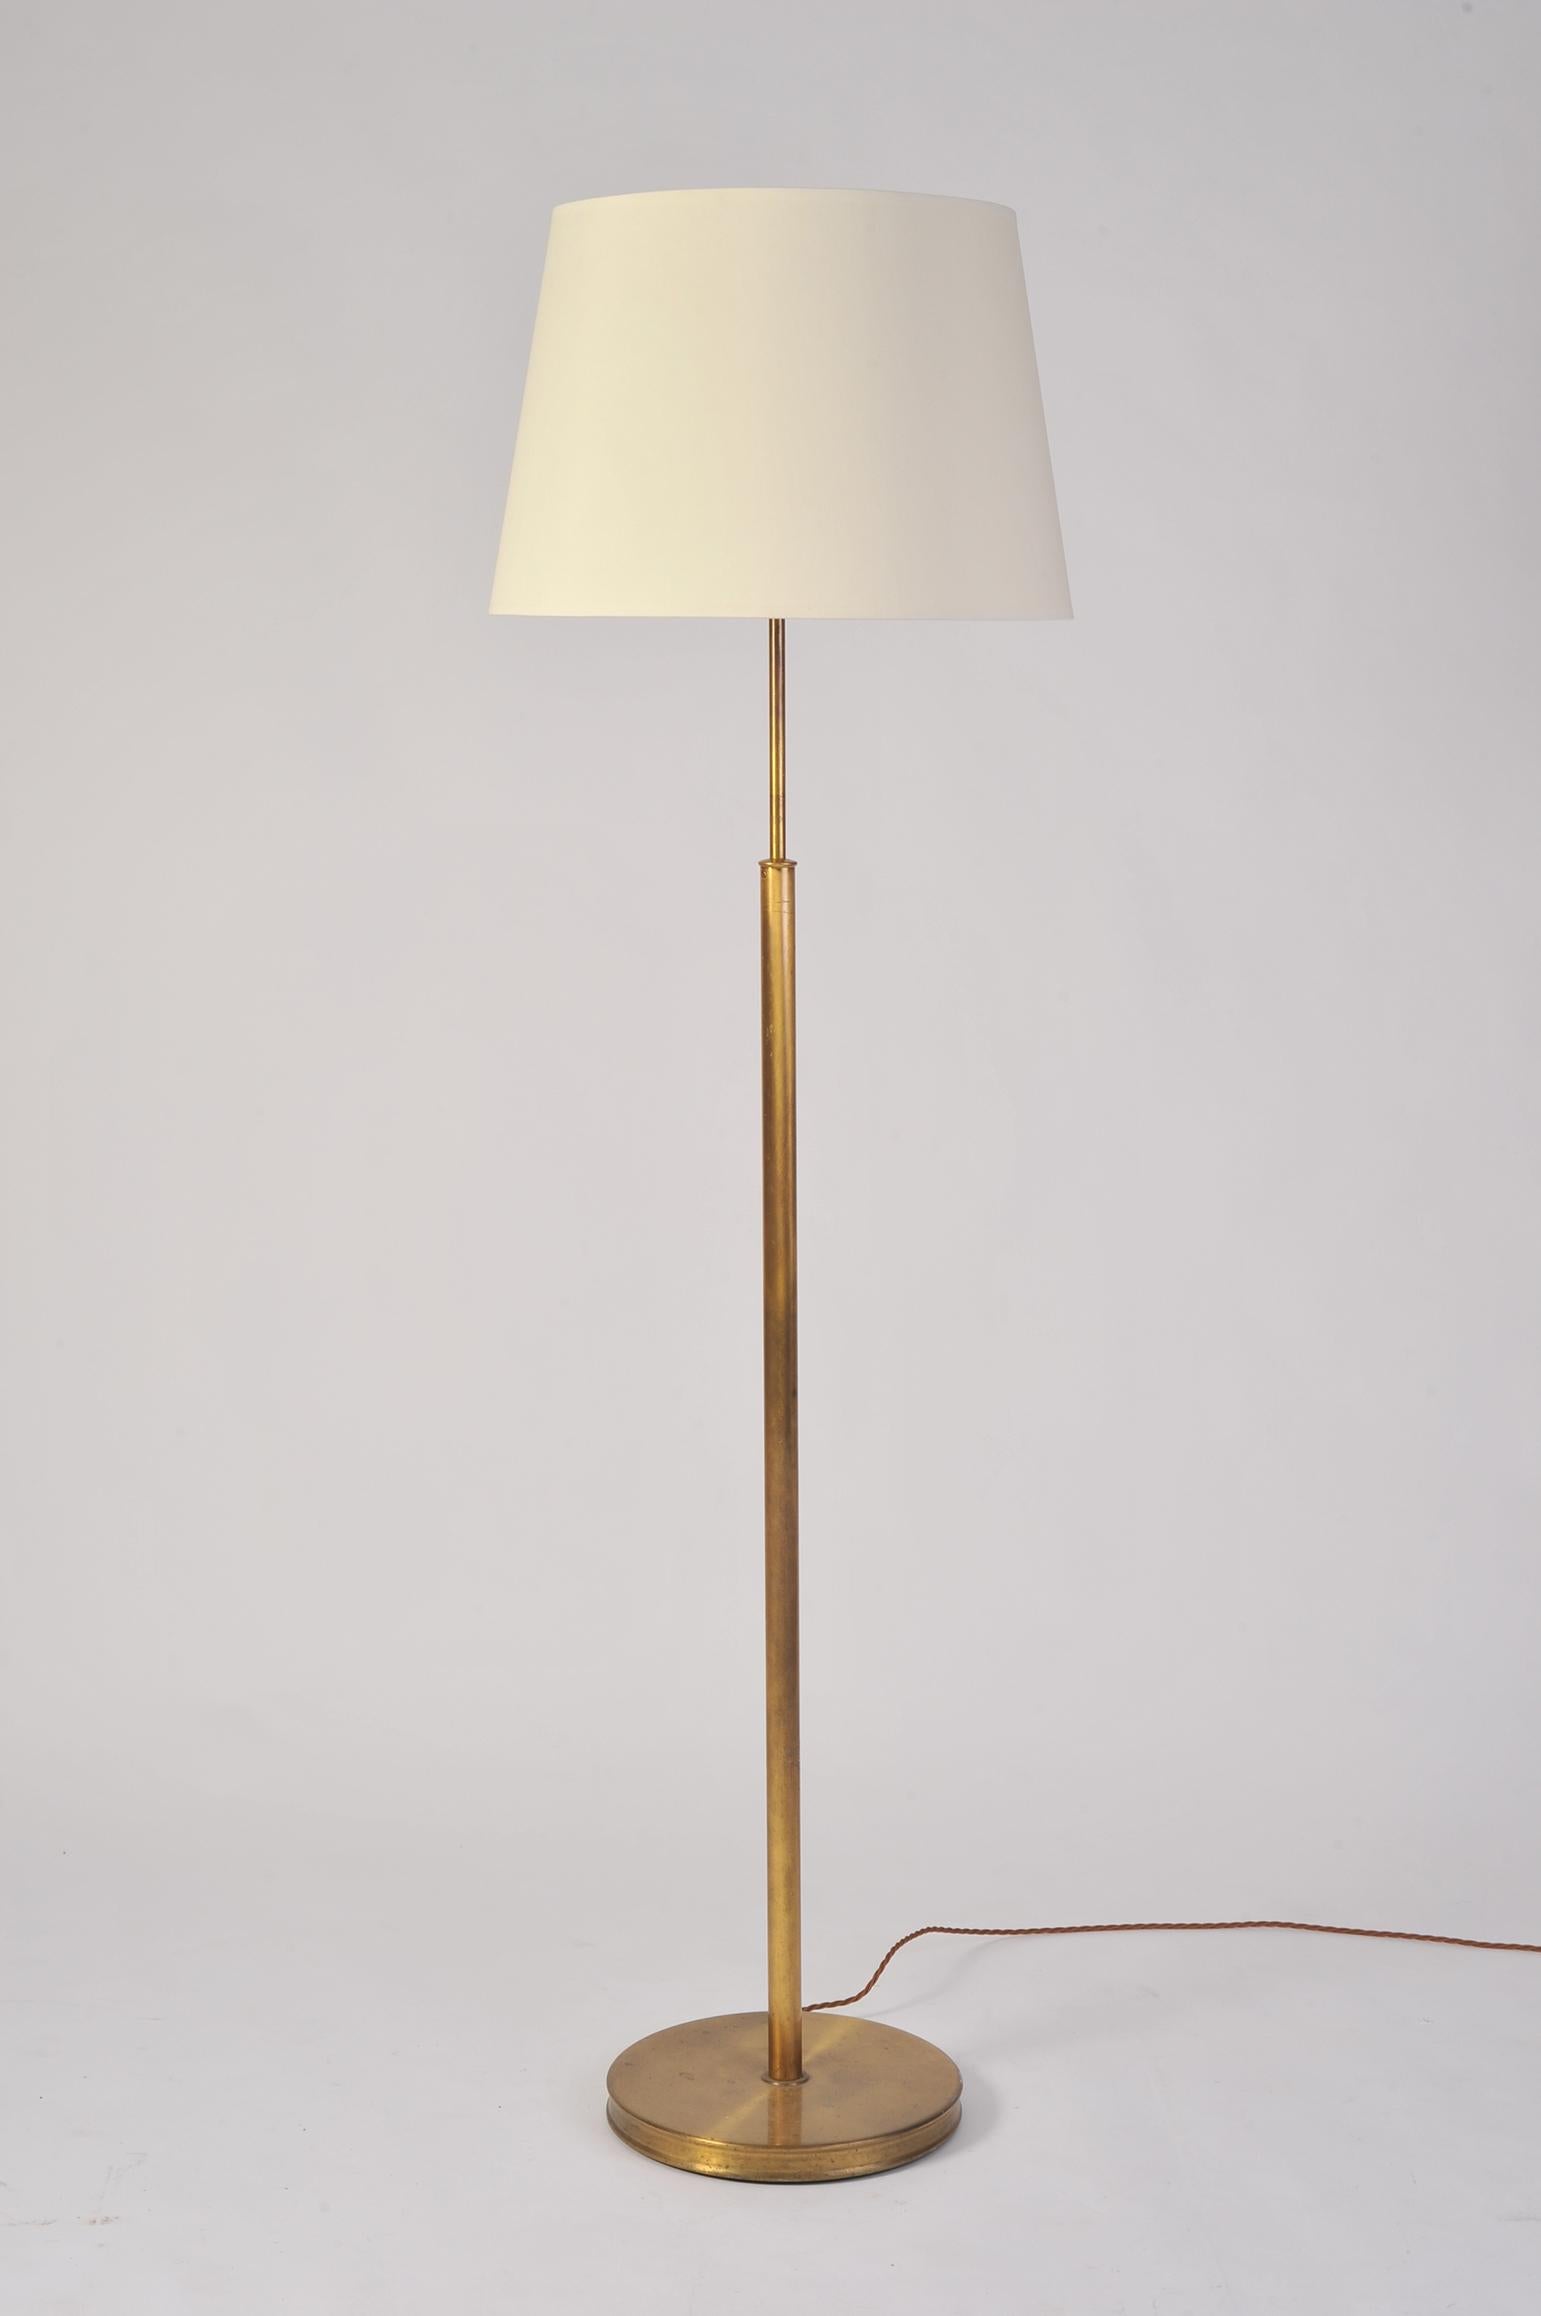 Scandinavian Modern Pair of 1950s Brass Floor Lamps by Josef Frank, Model 2148